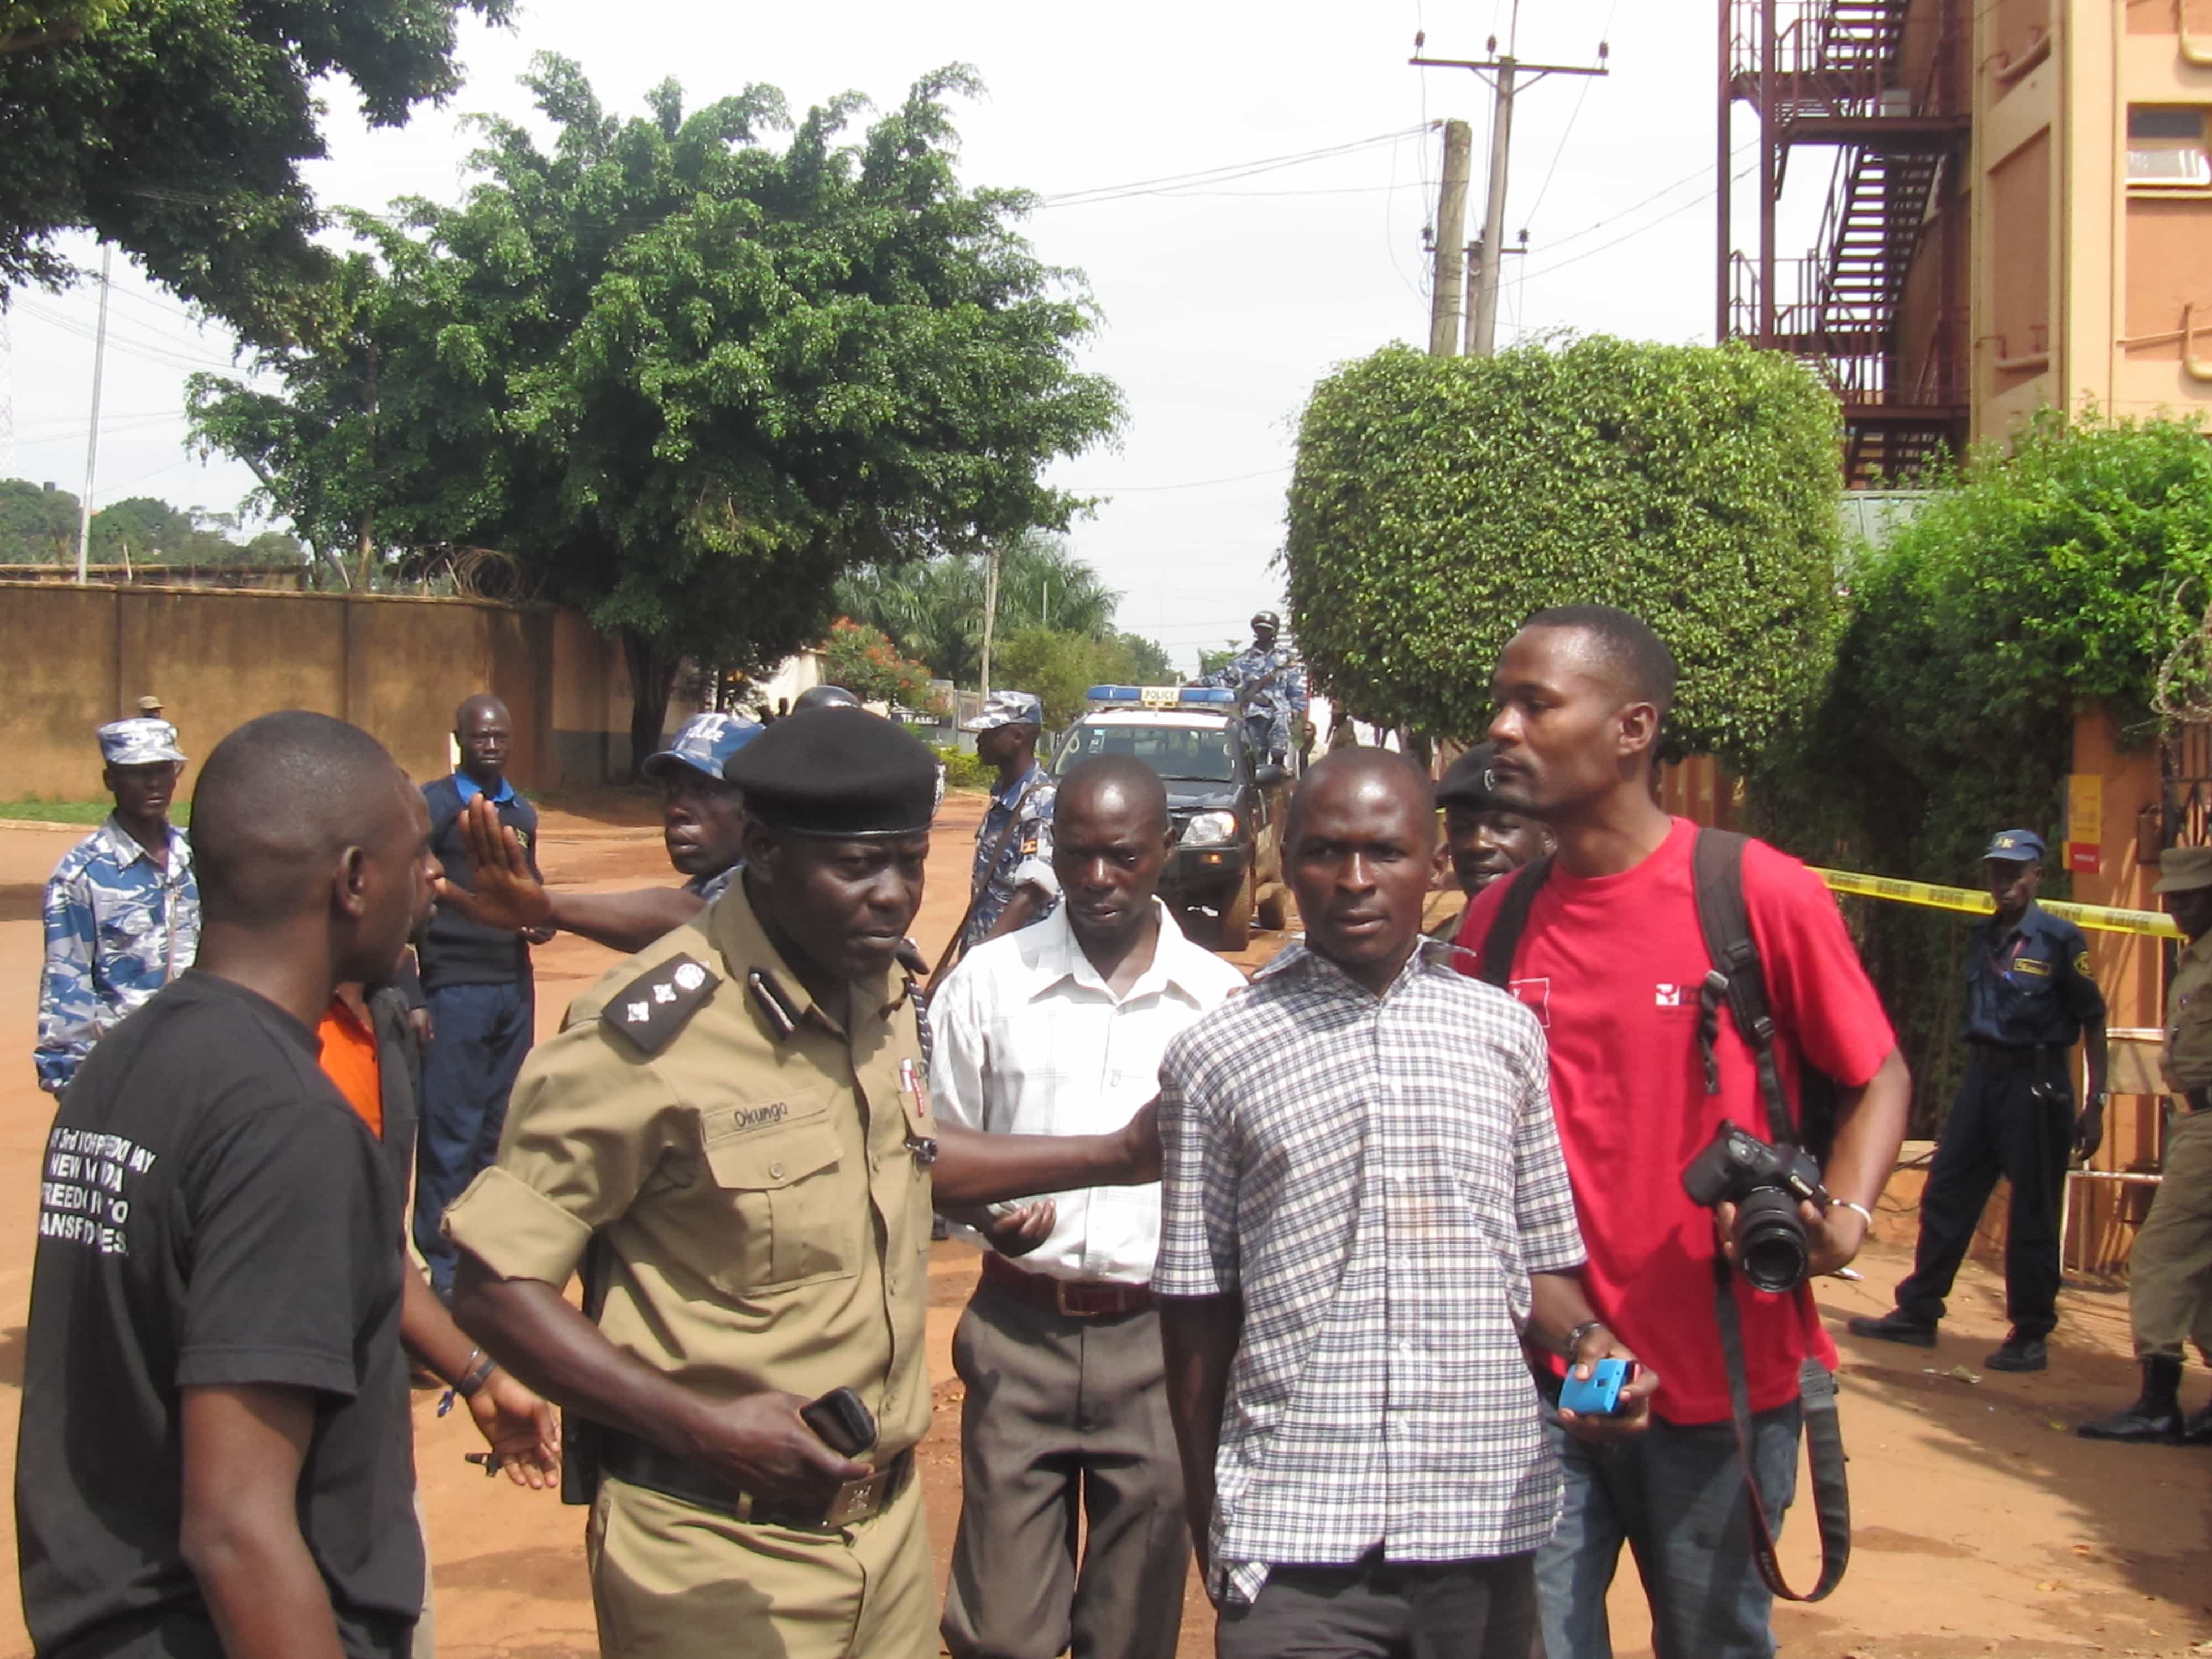 Police arrested HRNJ-Uganda's National Coordinator, Geoffrey Wokulira Ssebaggala, during protests about media closures in Uganda on 28 May., HRNJ-Uganda